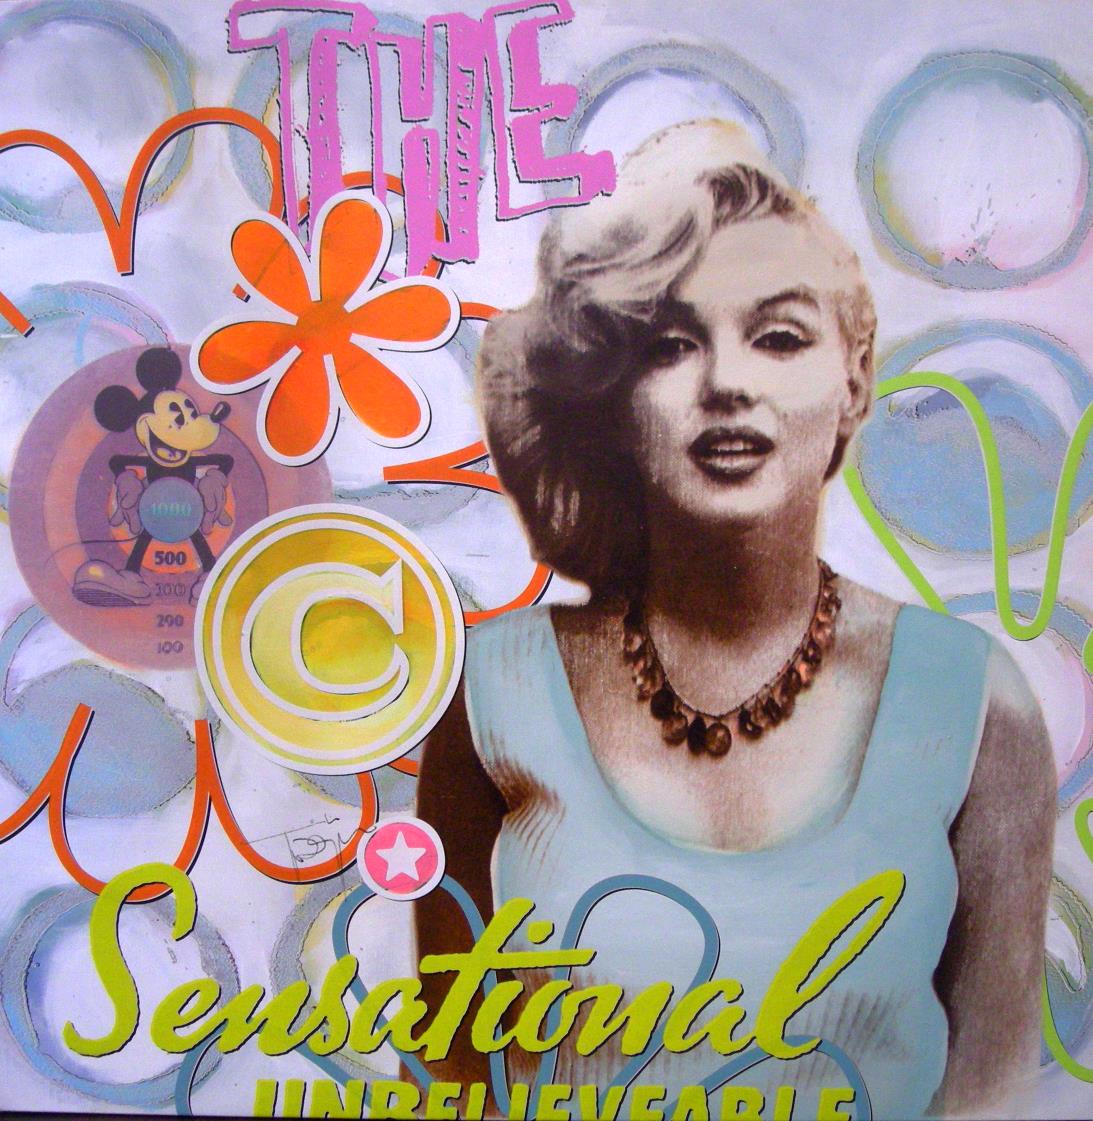 The Sensational - One of Nine